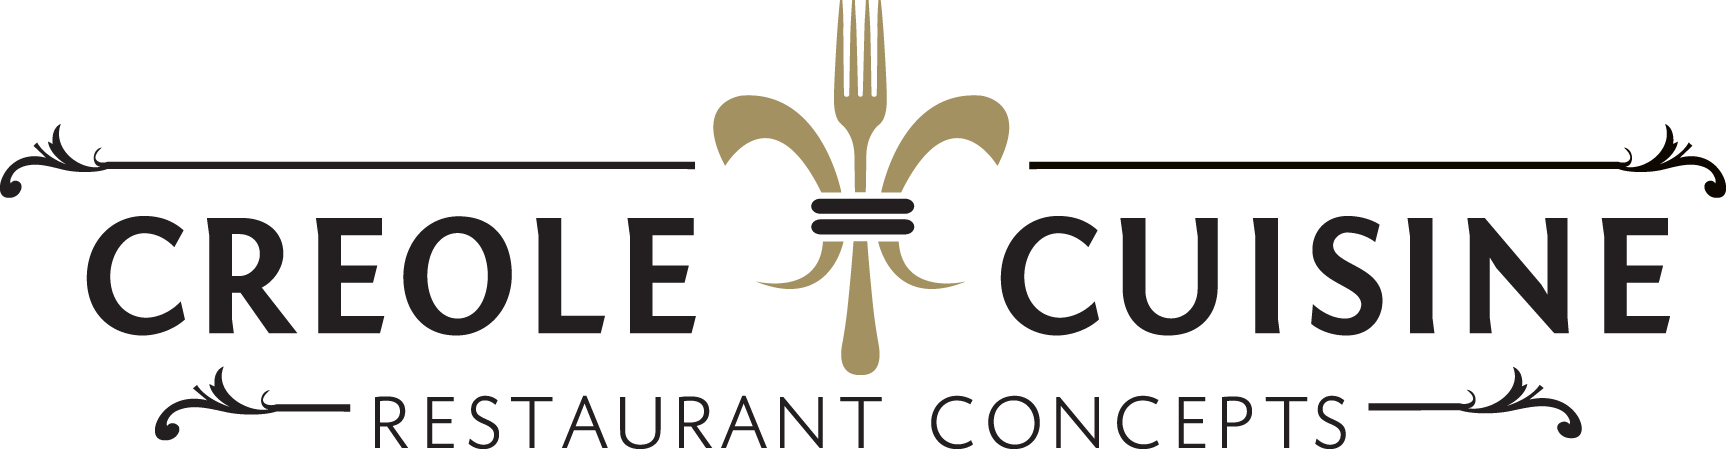 Creole Cuisine Restaurant Concepts logo